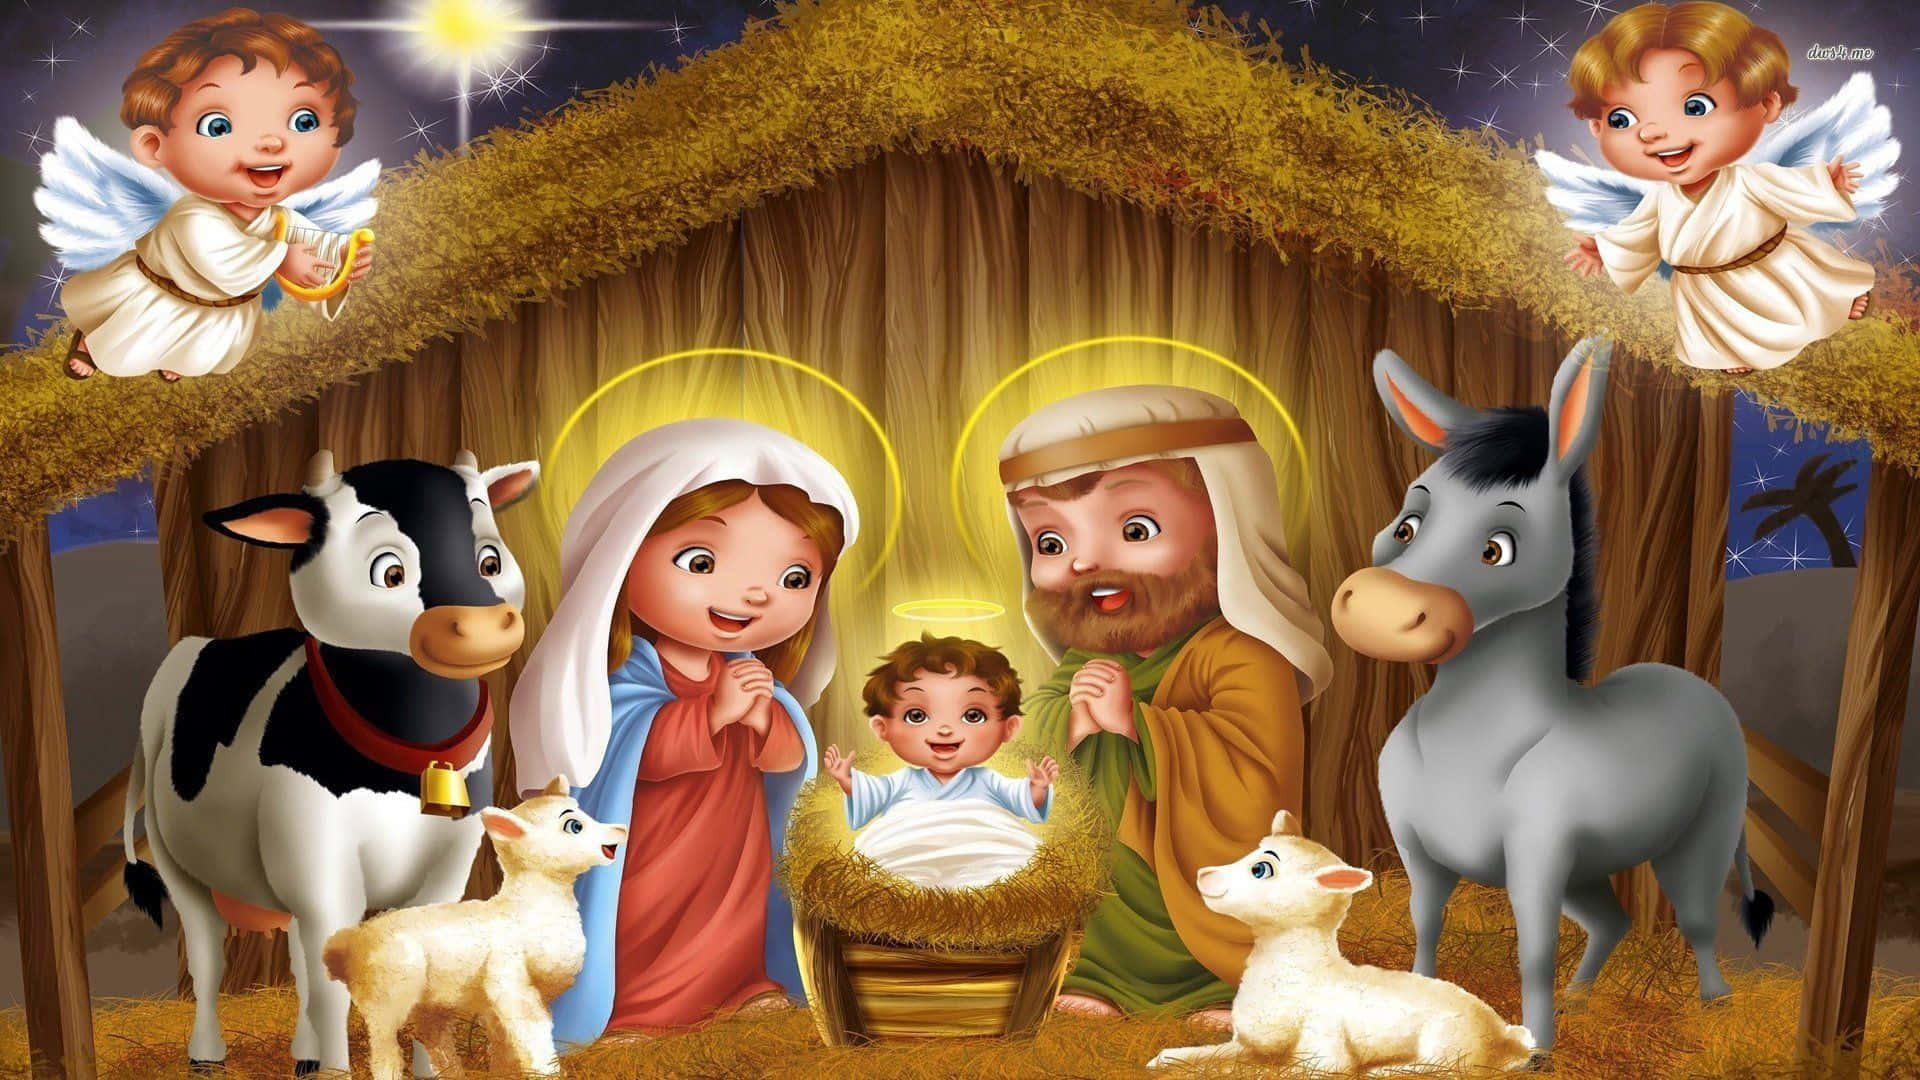 Celebrate the Christmas season with the Nativity